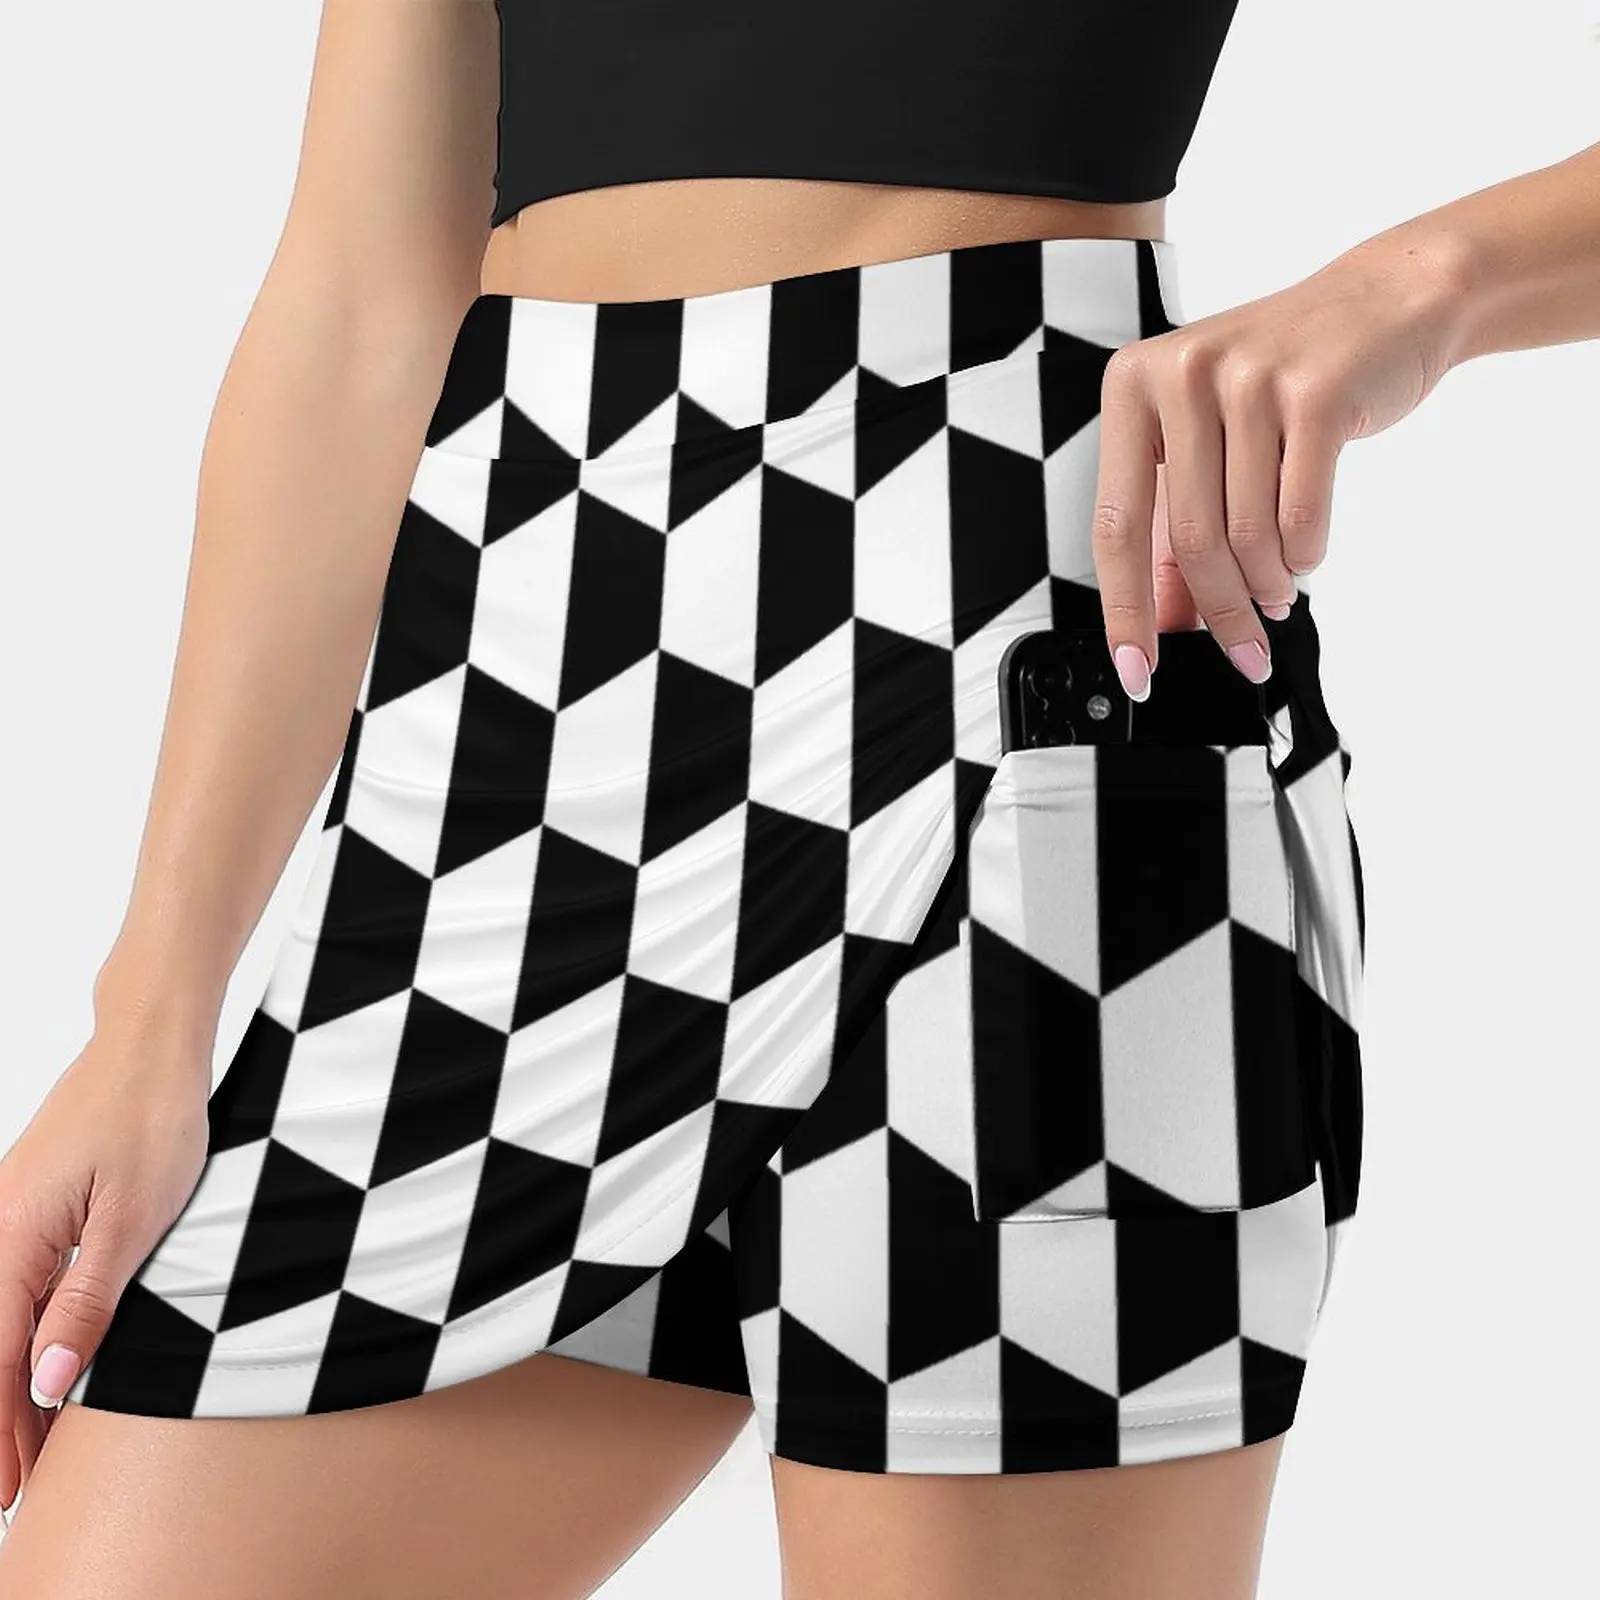 

Black And White Hexagons Women's skirt Mini Skirts A Line Skirt With Hide Pocket Checkered Honeycomb Hexagon Hexagonal Pattern